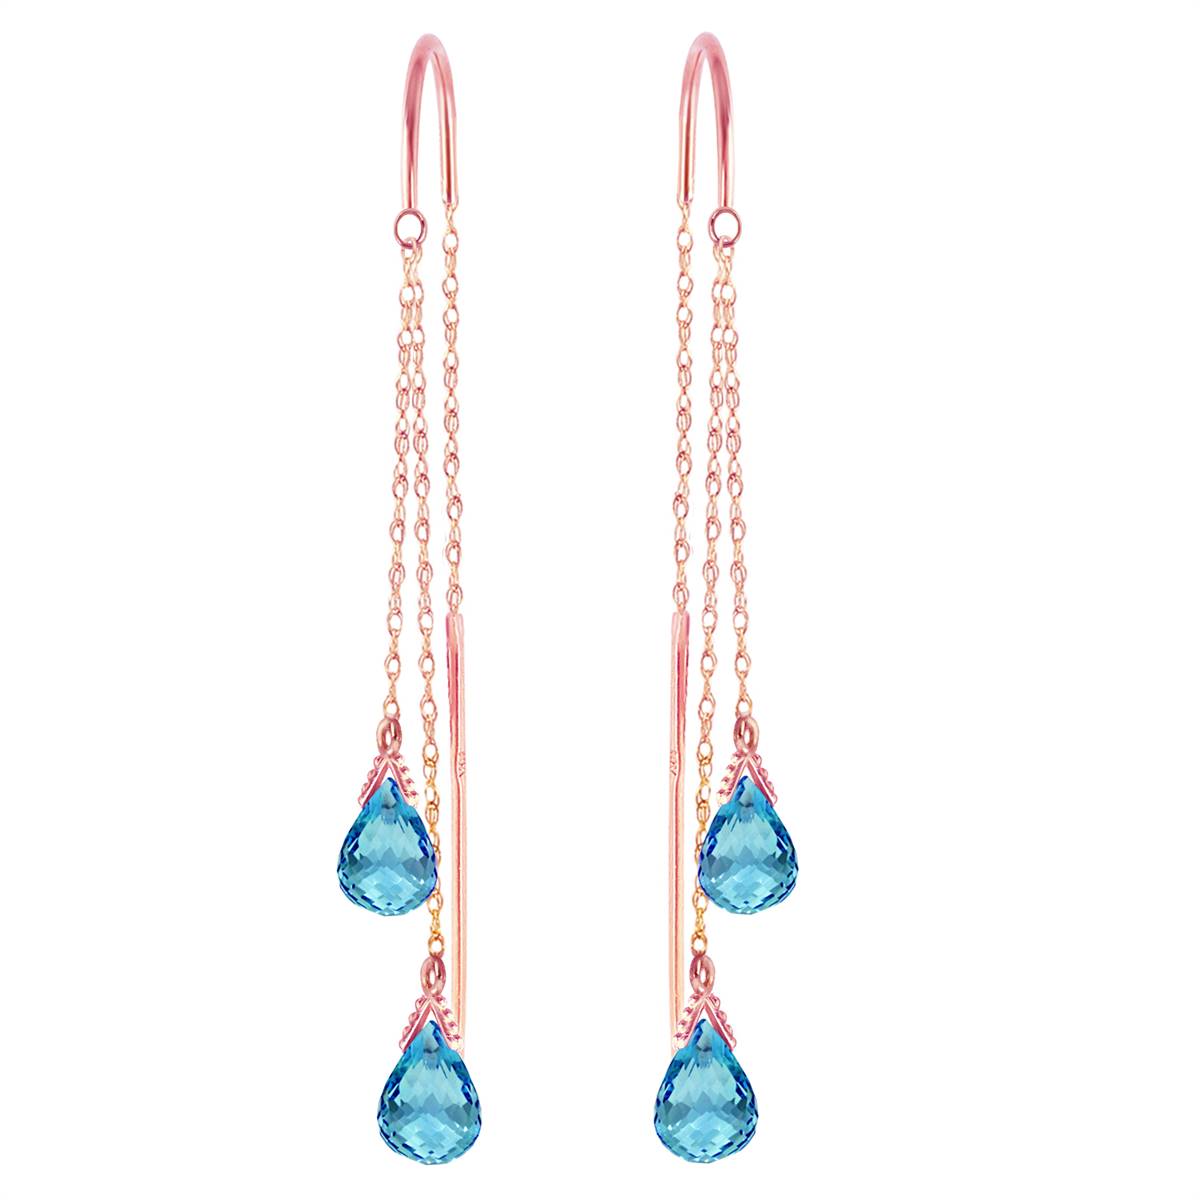 14K Solid Rose Gold Threaded Dangles Earrings Blue Topaz Jewelry